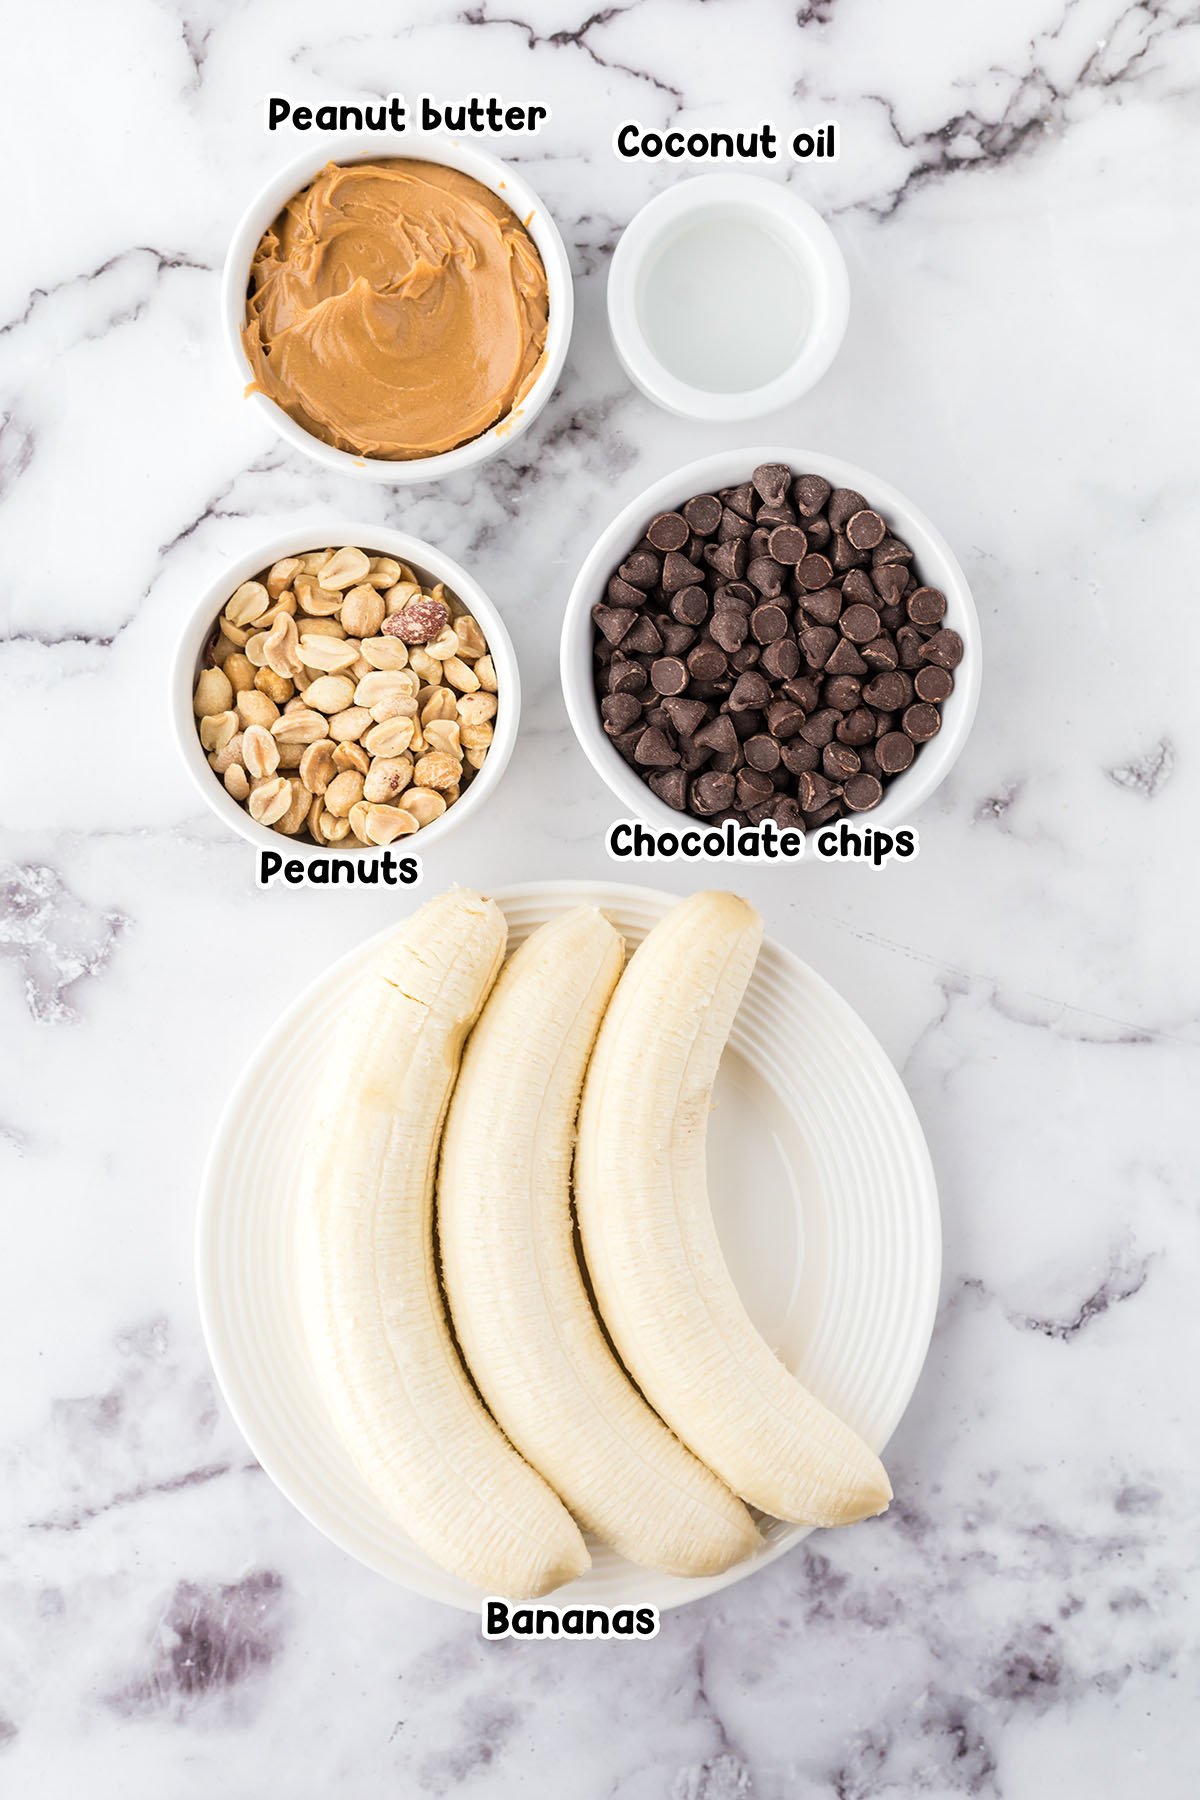 Chocolate Banana Bites ingredients